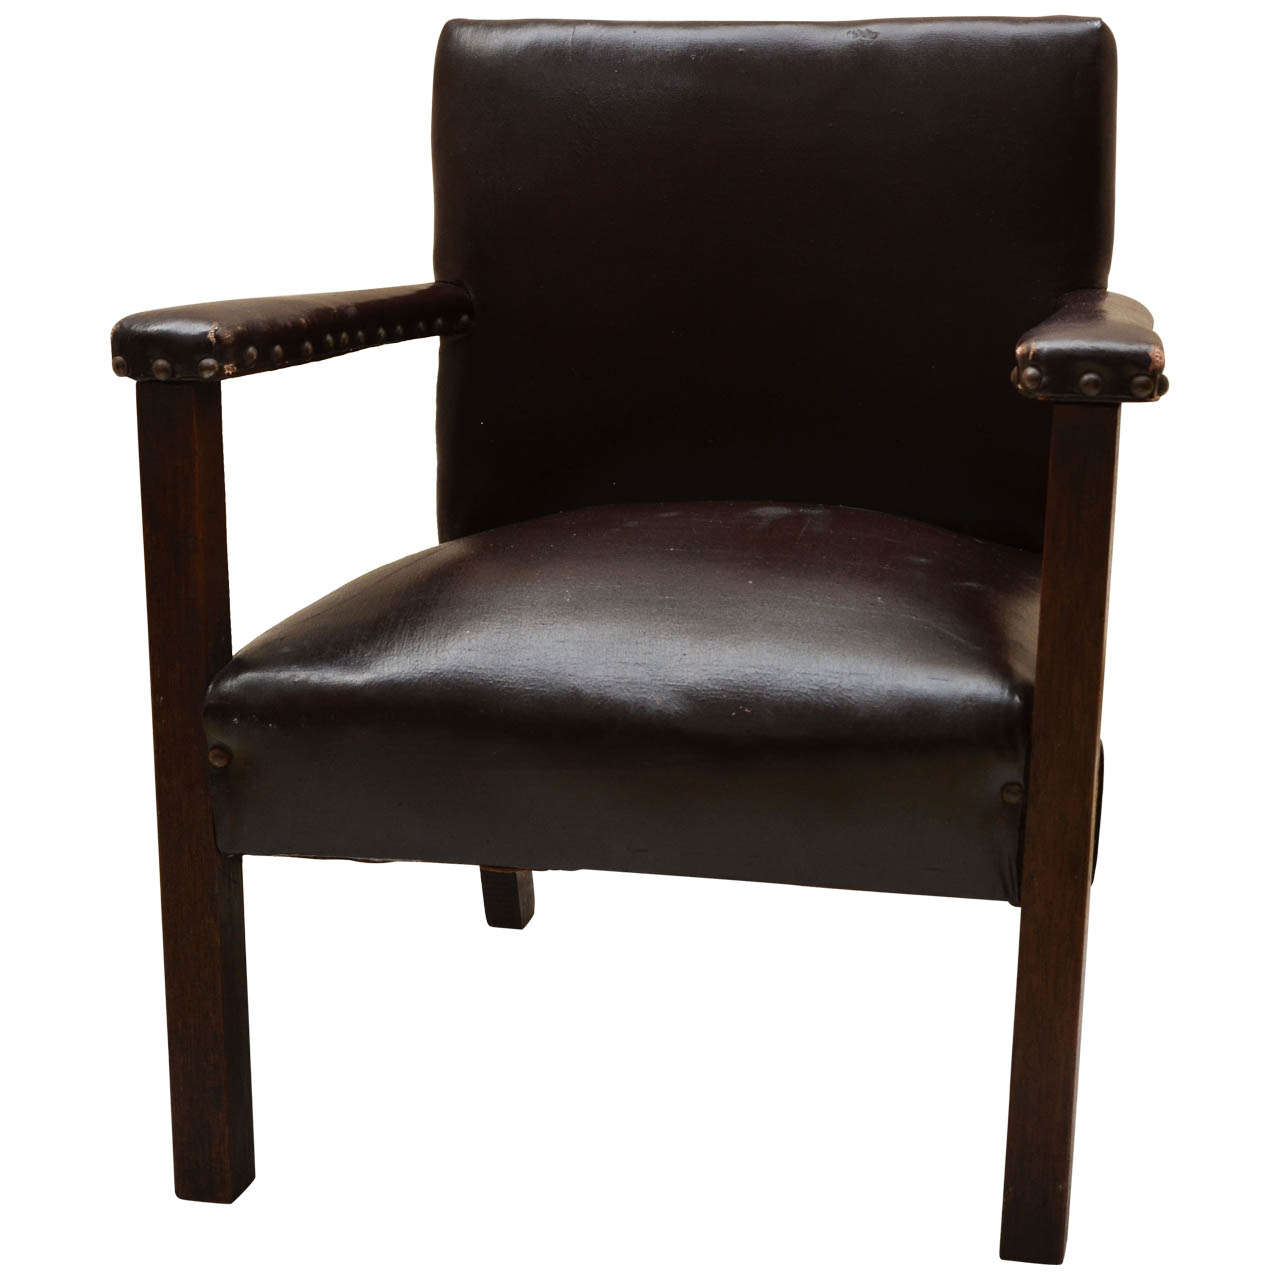 English Handmade Platform Arm Childs Chair For Sale